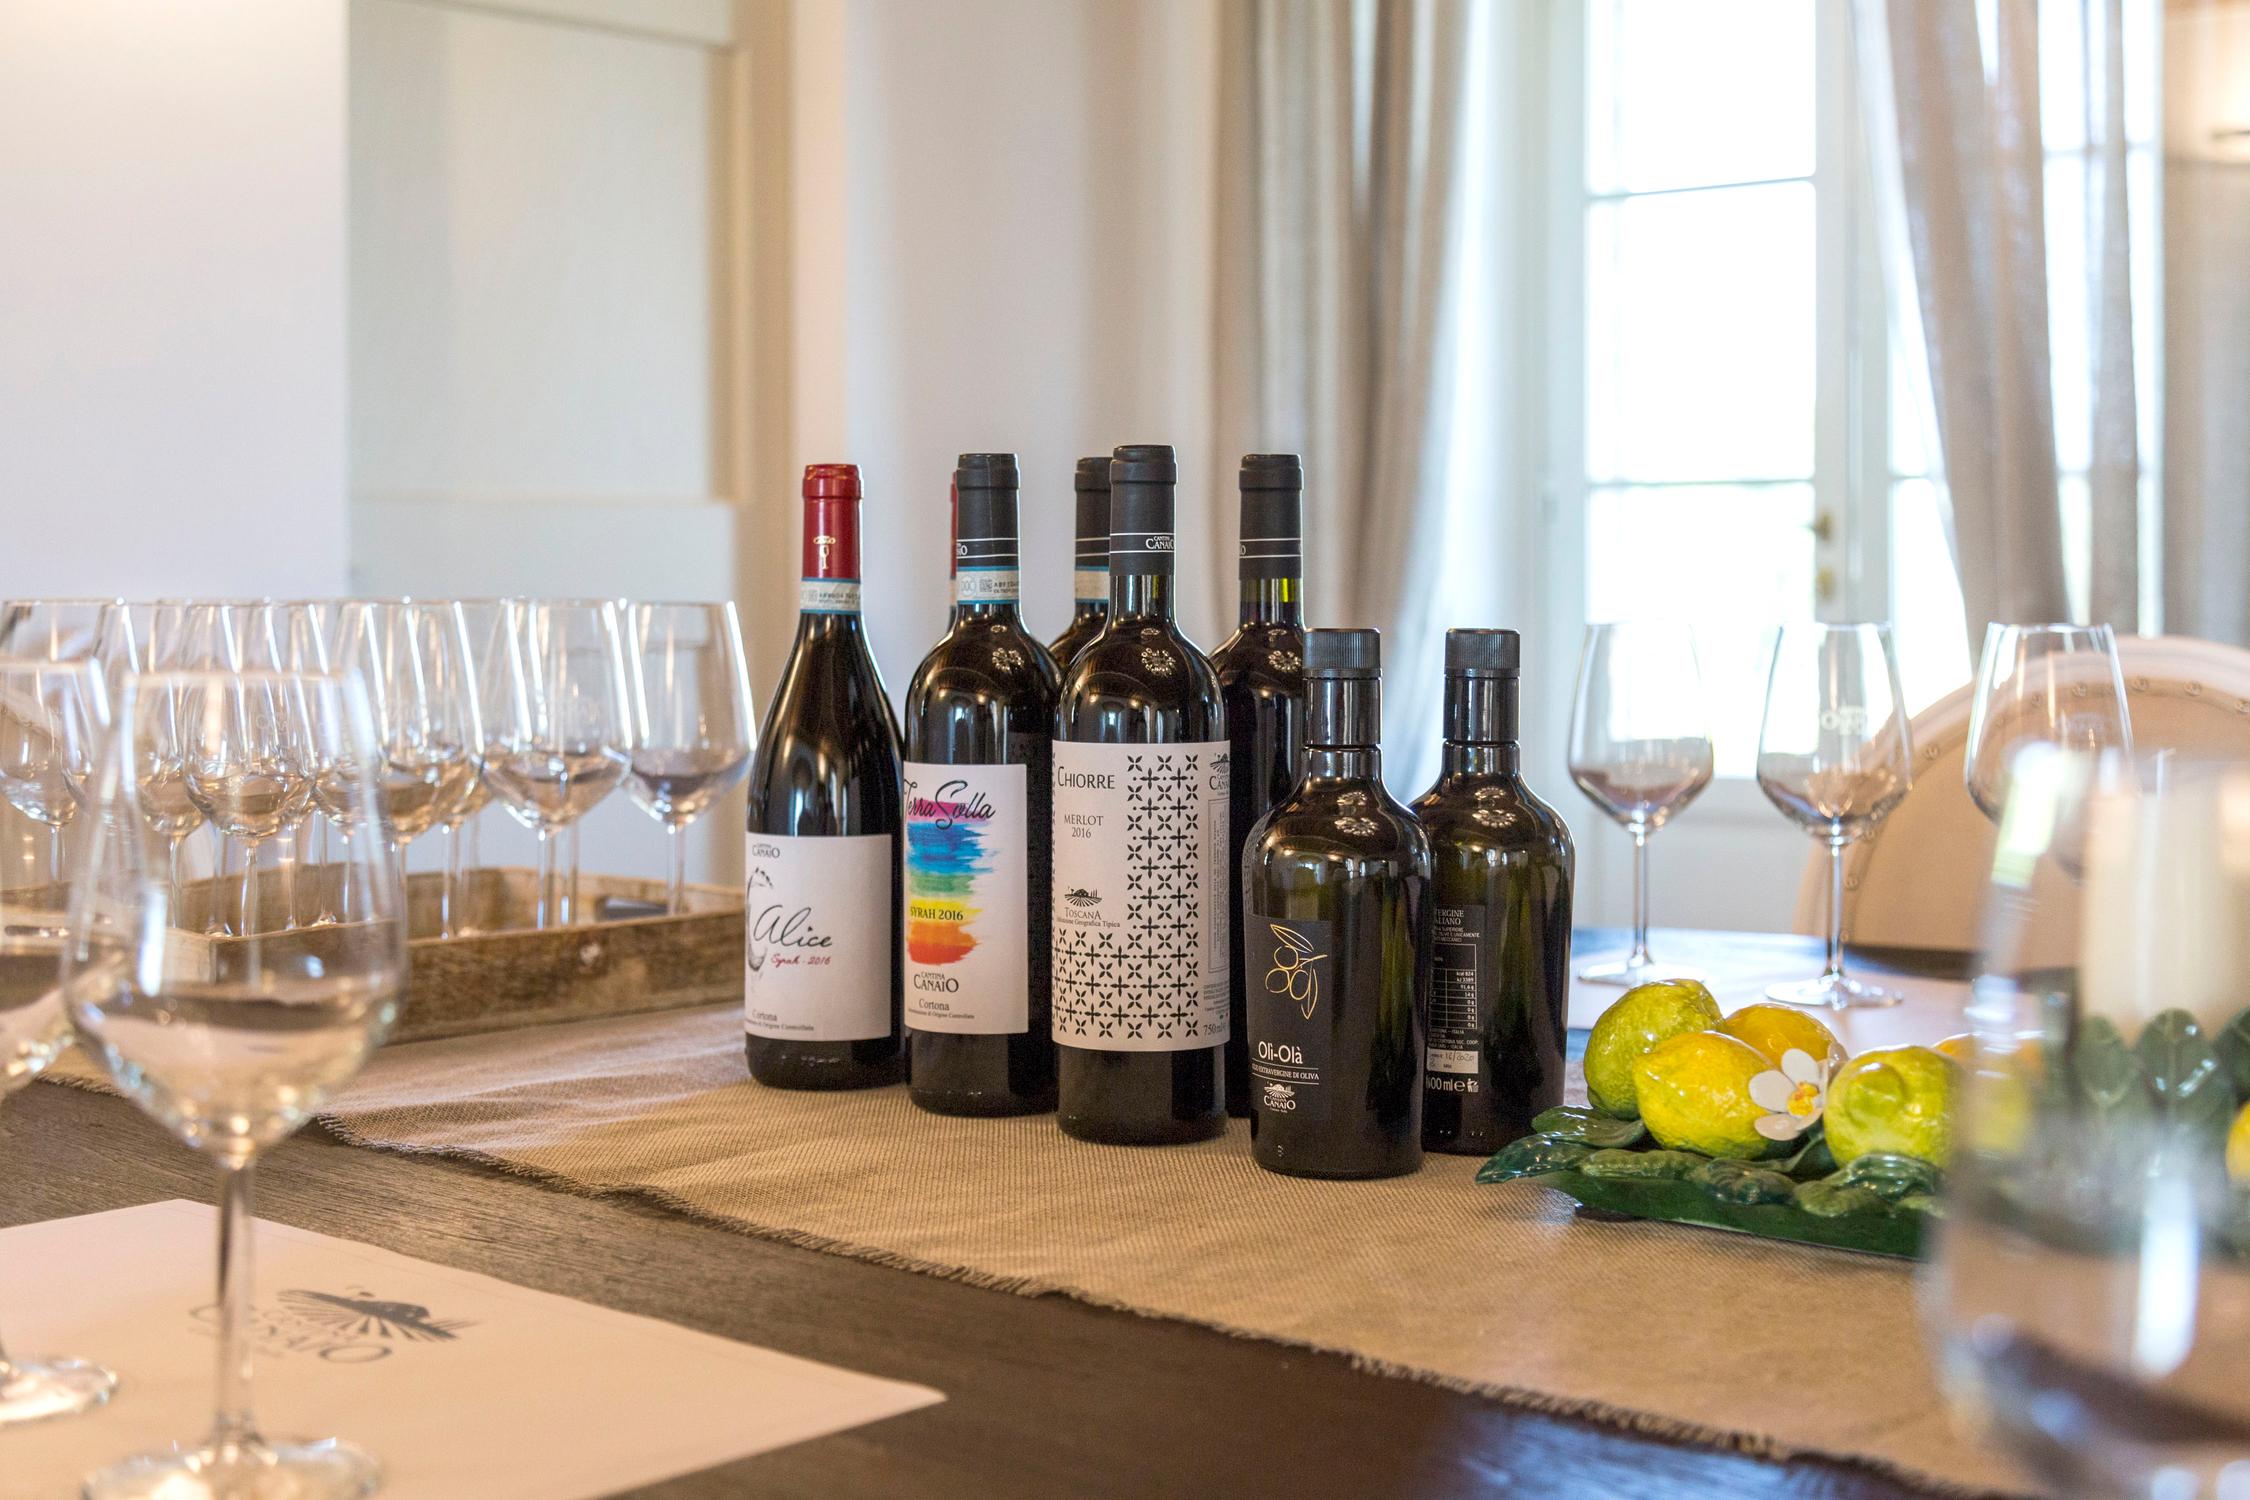 Cantina Canaio, Tuscan wines | Cortona Syrah and Merlot